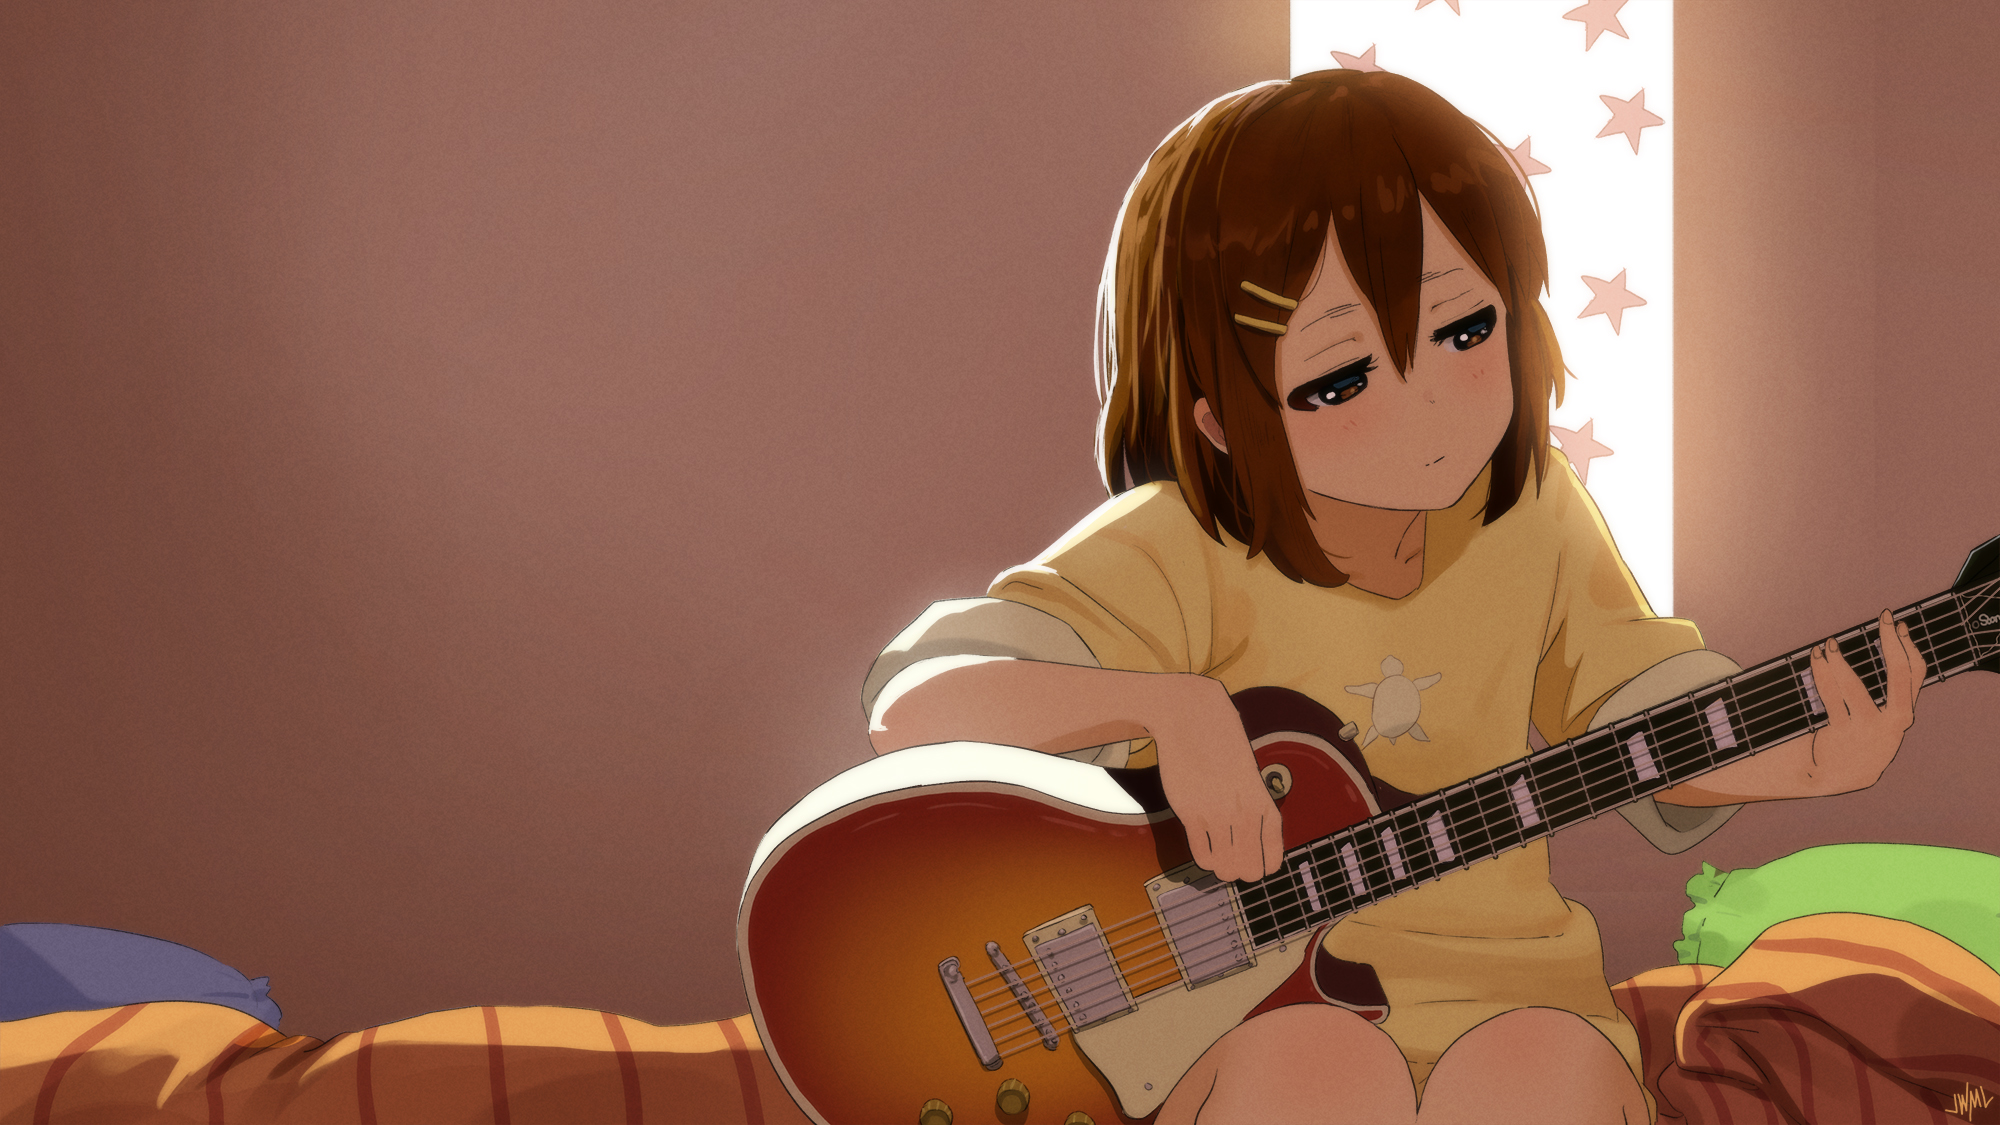 Anime 2000x1125 Hirasawa Yui K-ON! anime girls anime brunette T-shirt guitar musical instrument bedroom sitting fan art artwork digital art drawing illustration